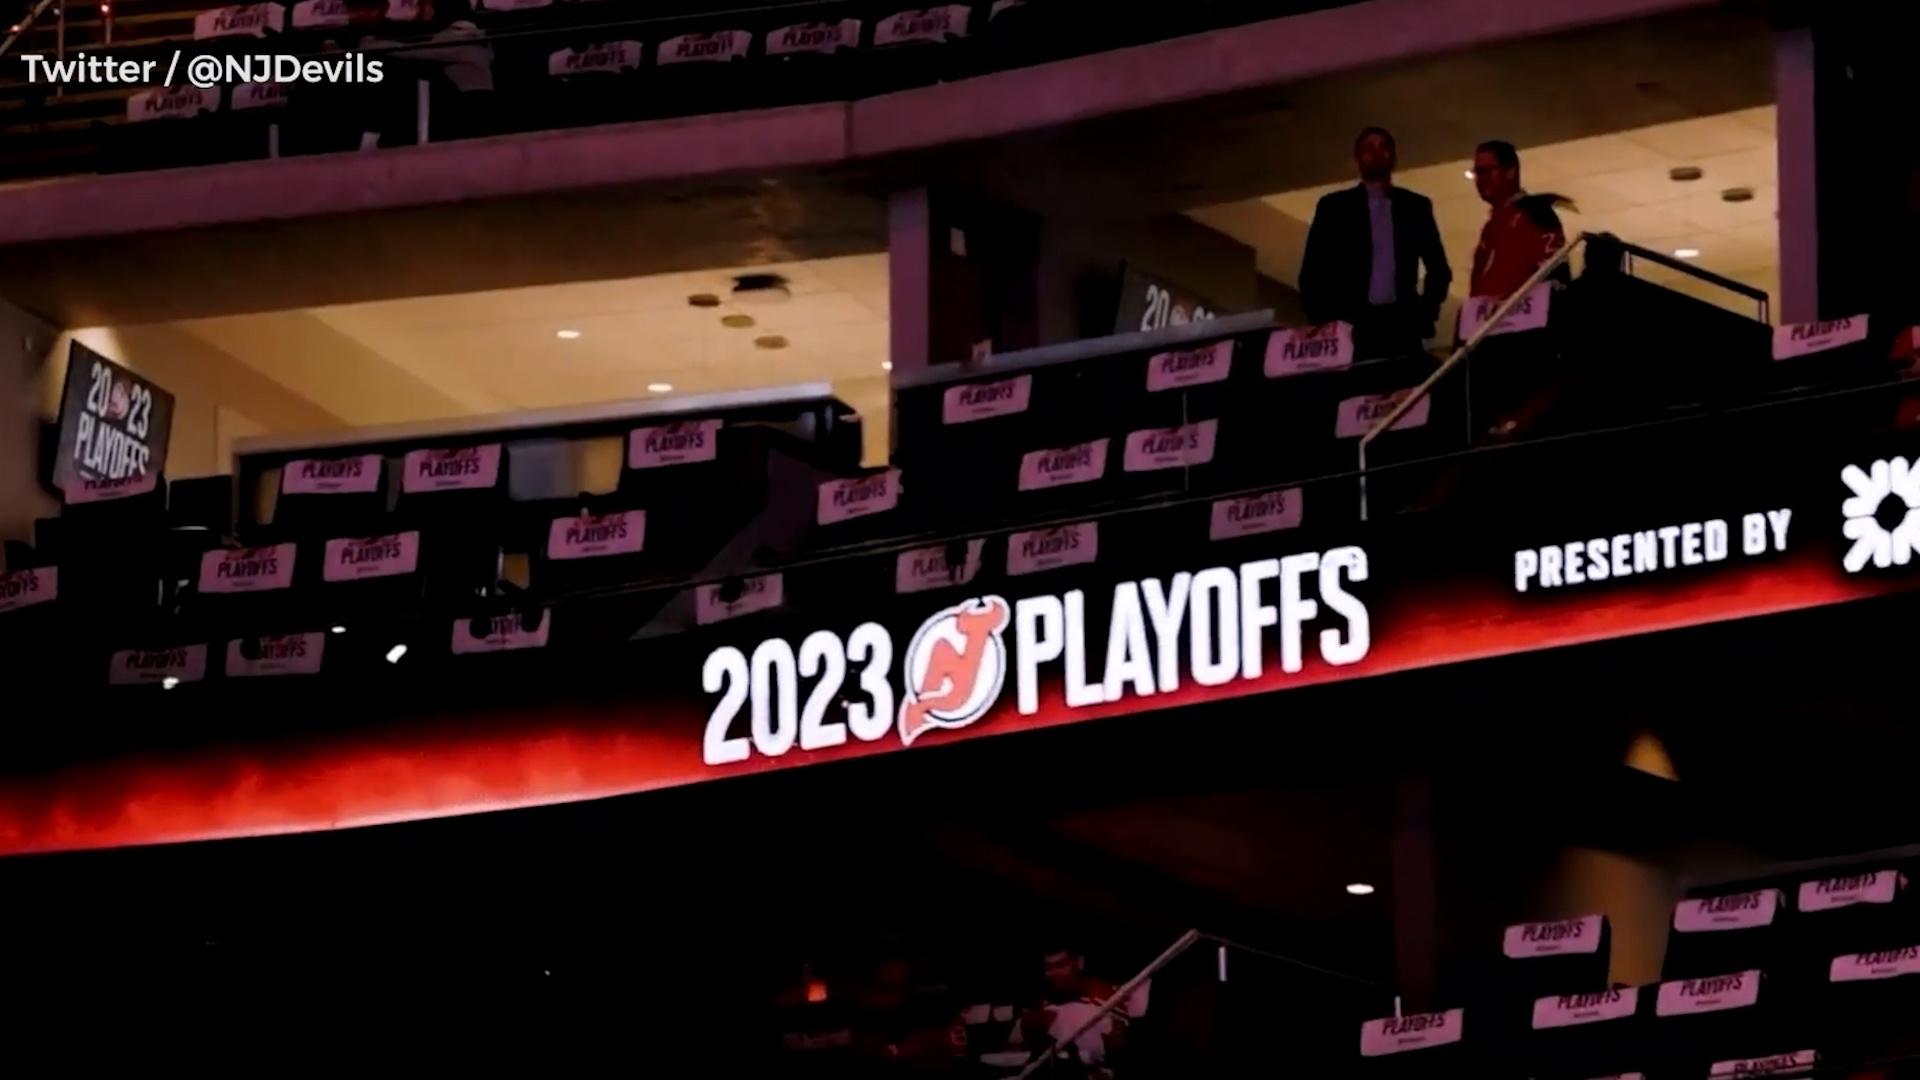 Devils address 2023 playoff ticket concerns, how they determine